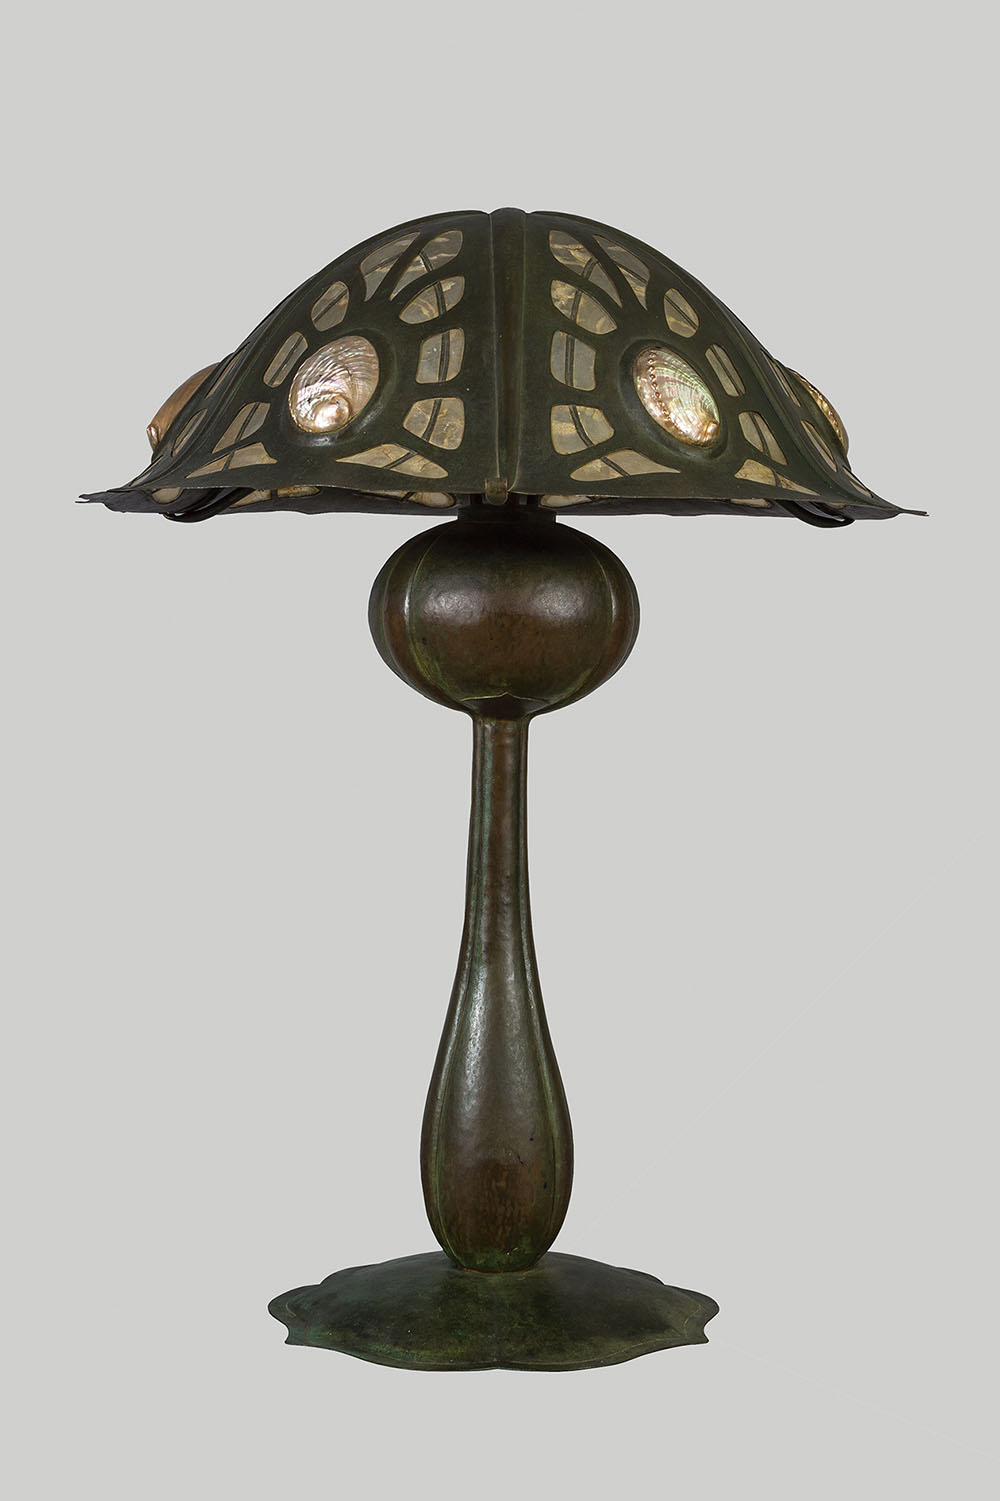 Fig. 1 - Elizabeth Eaton Burton, Medusa Lamp, c. 1905-1910, copper and shell, TRRF Collection.